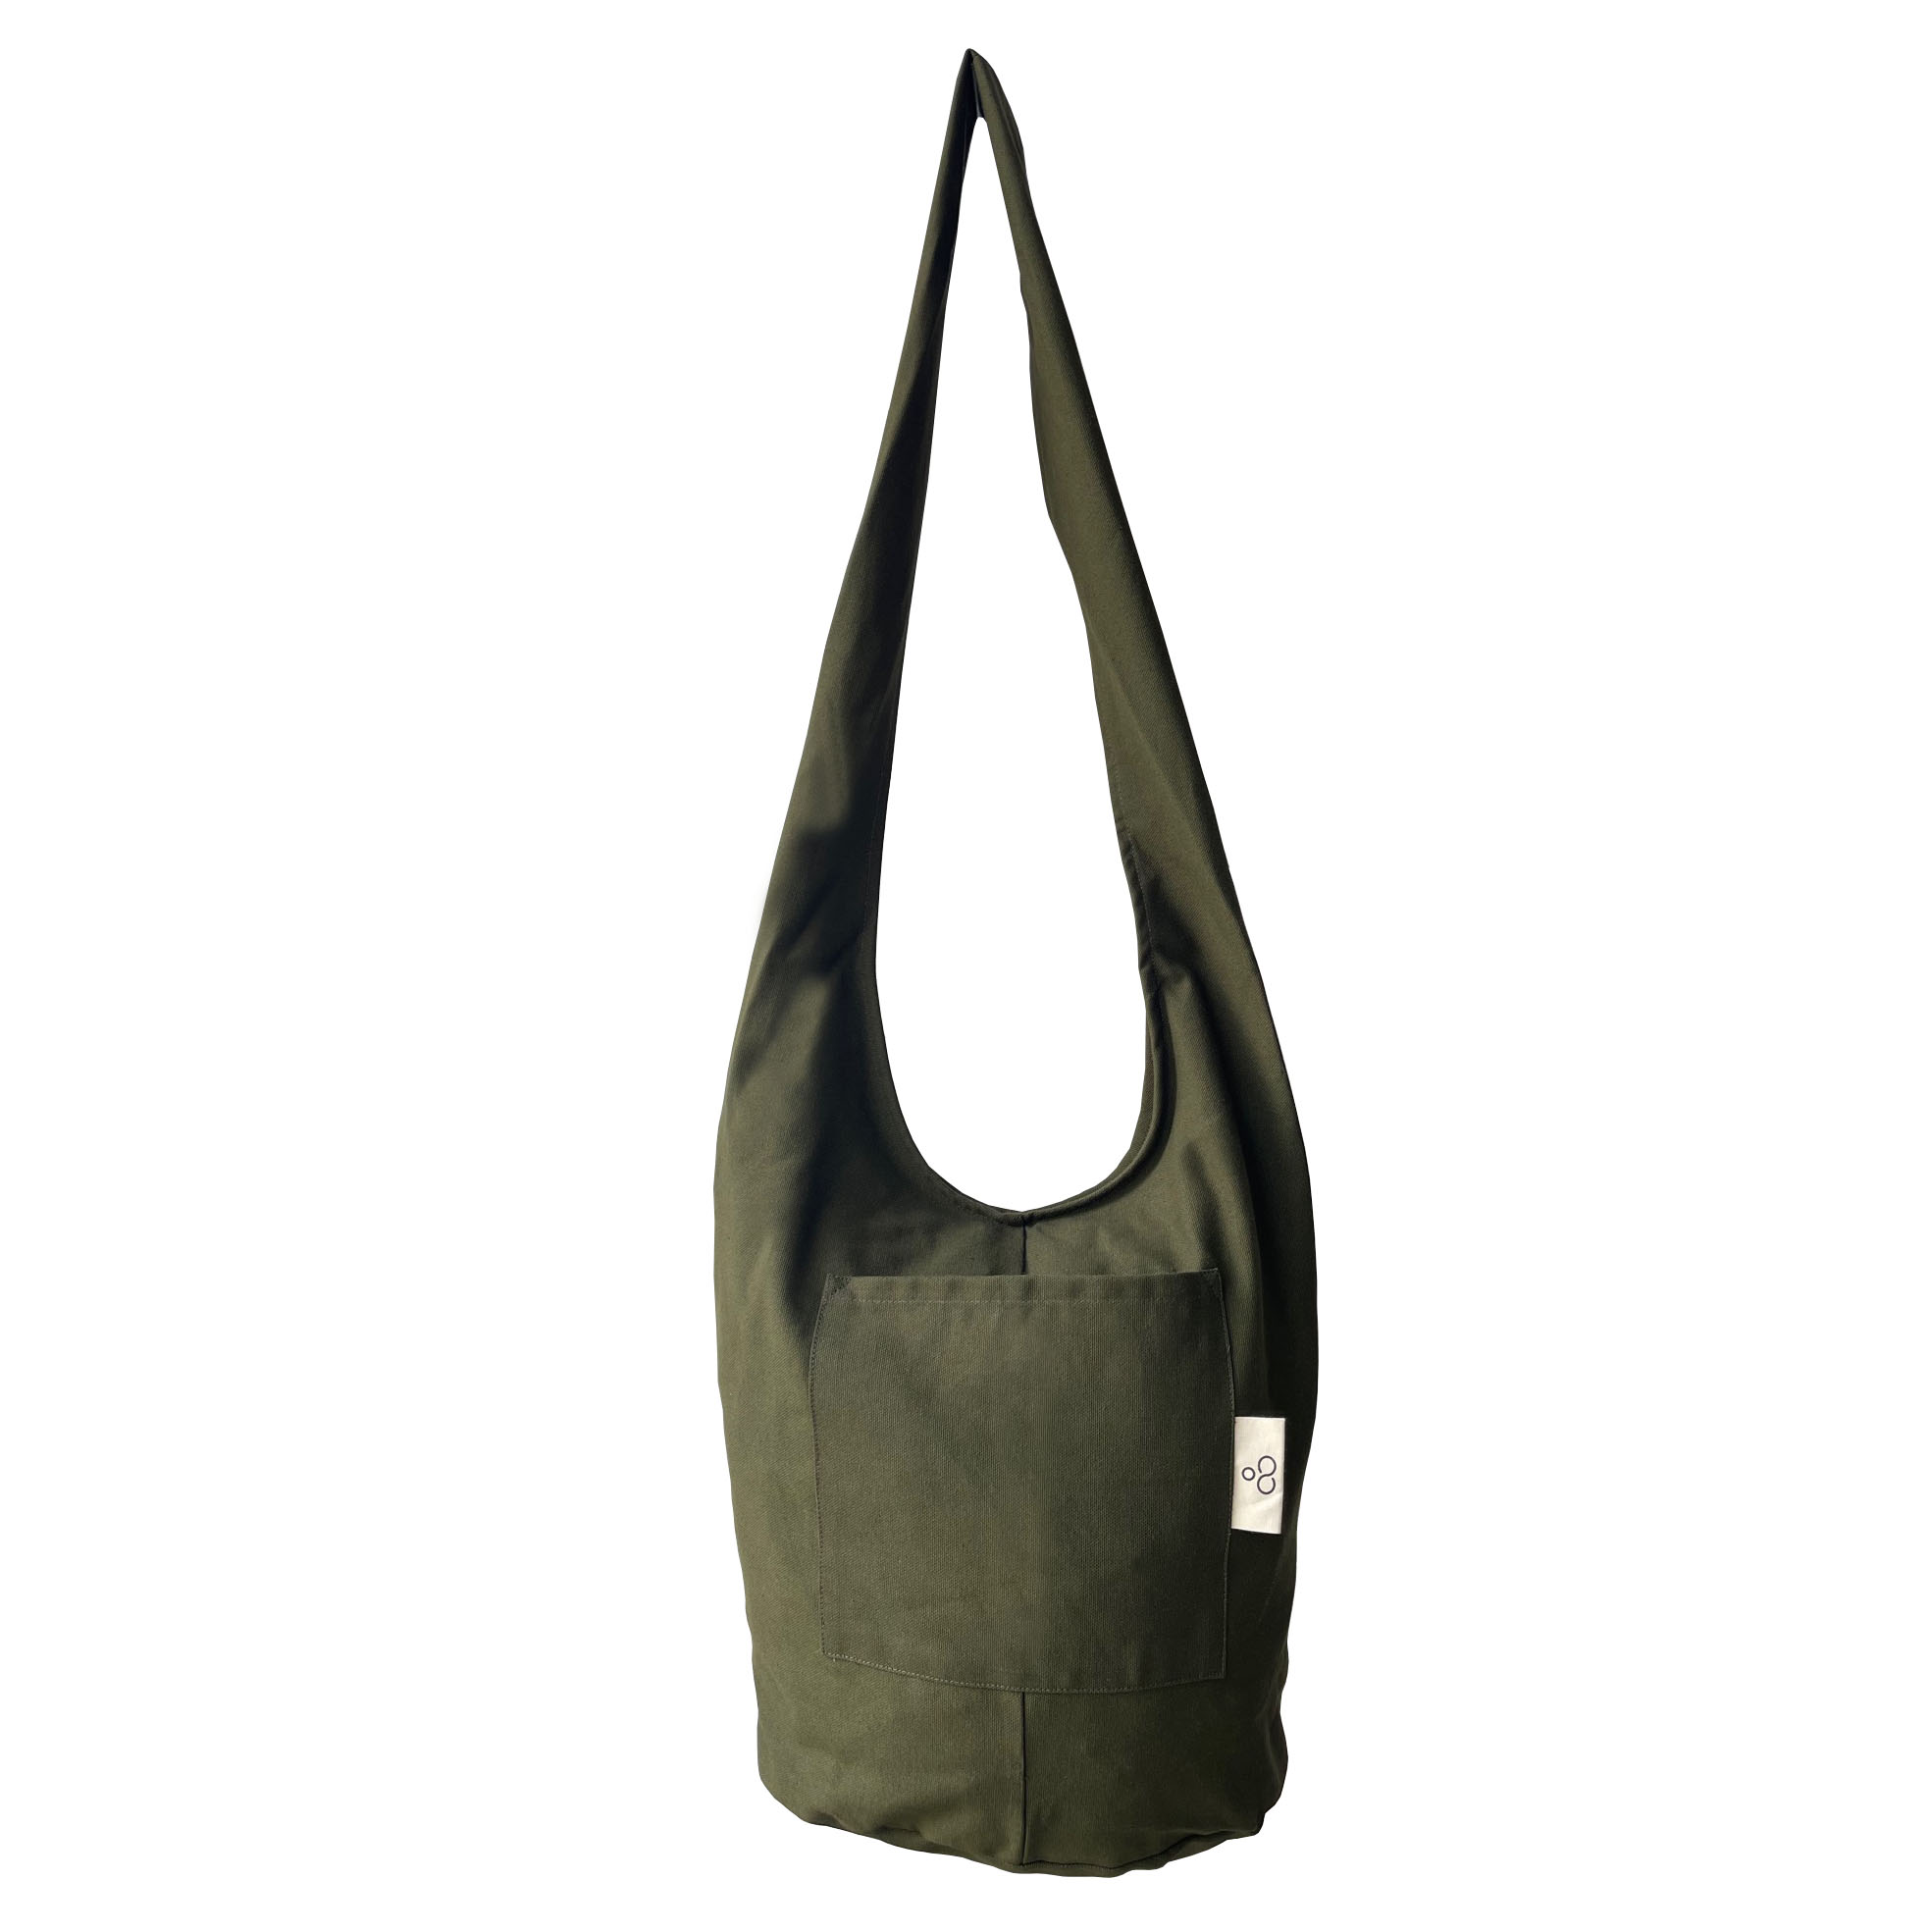 Olive green cotton monk bag